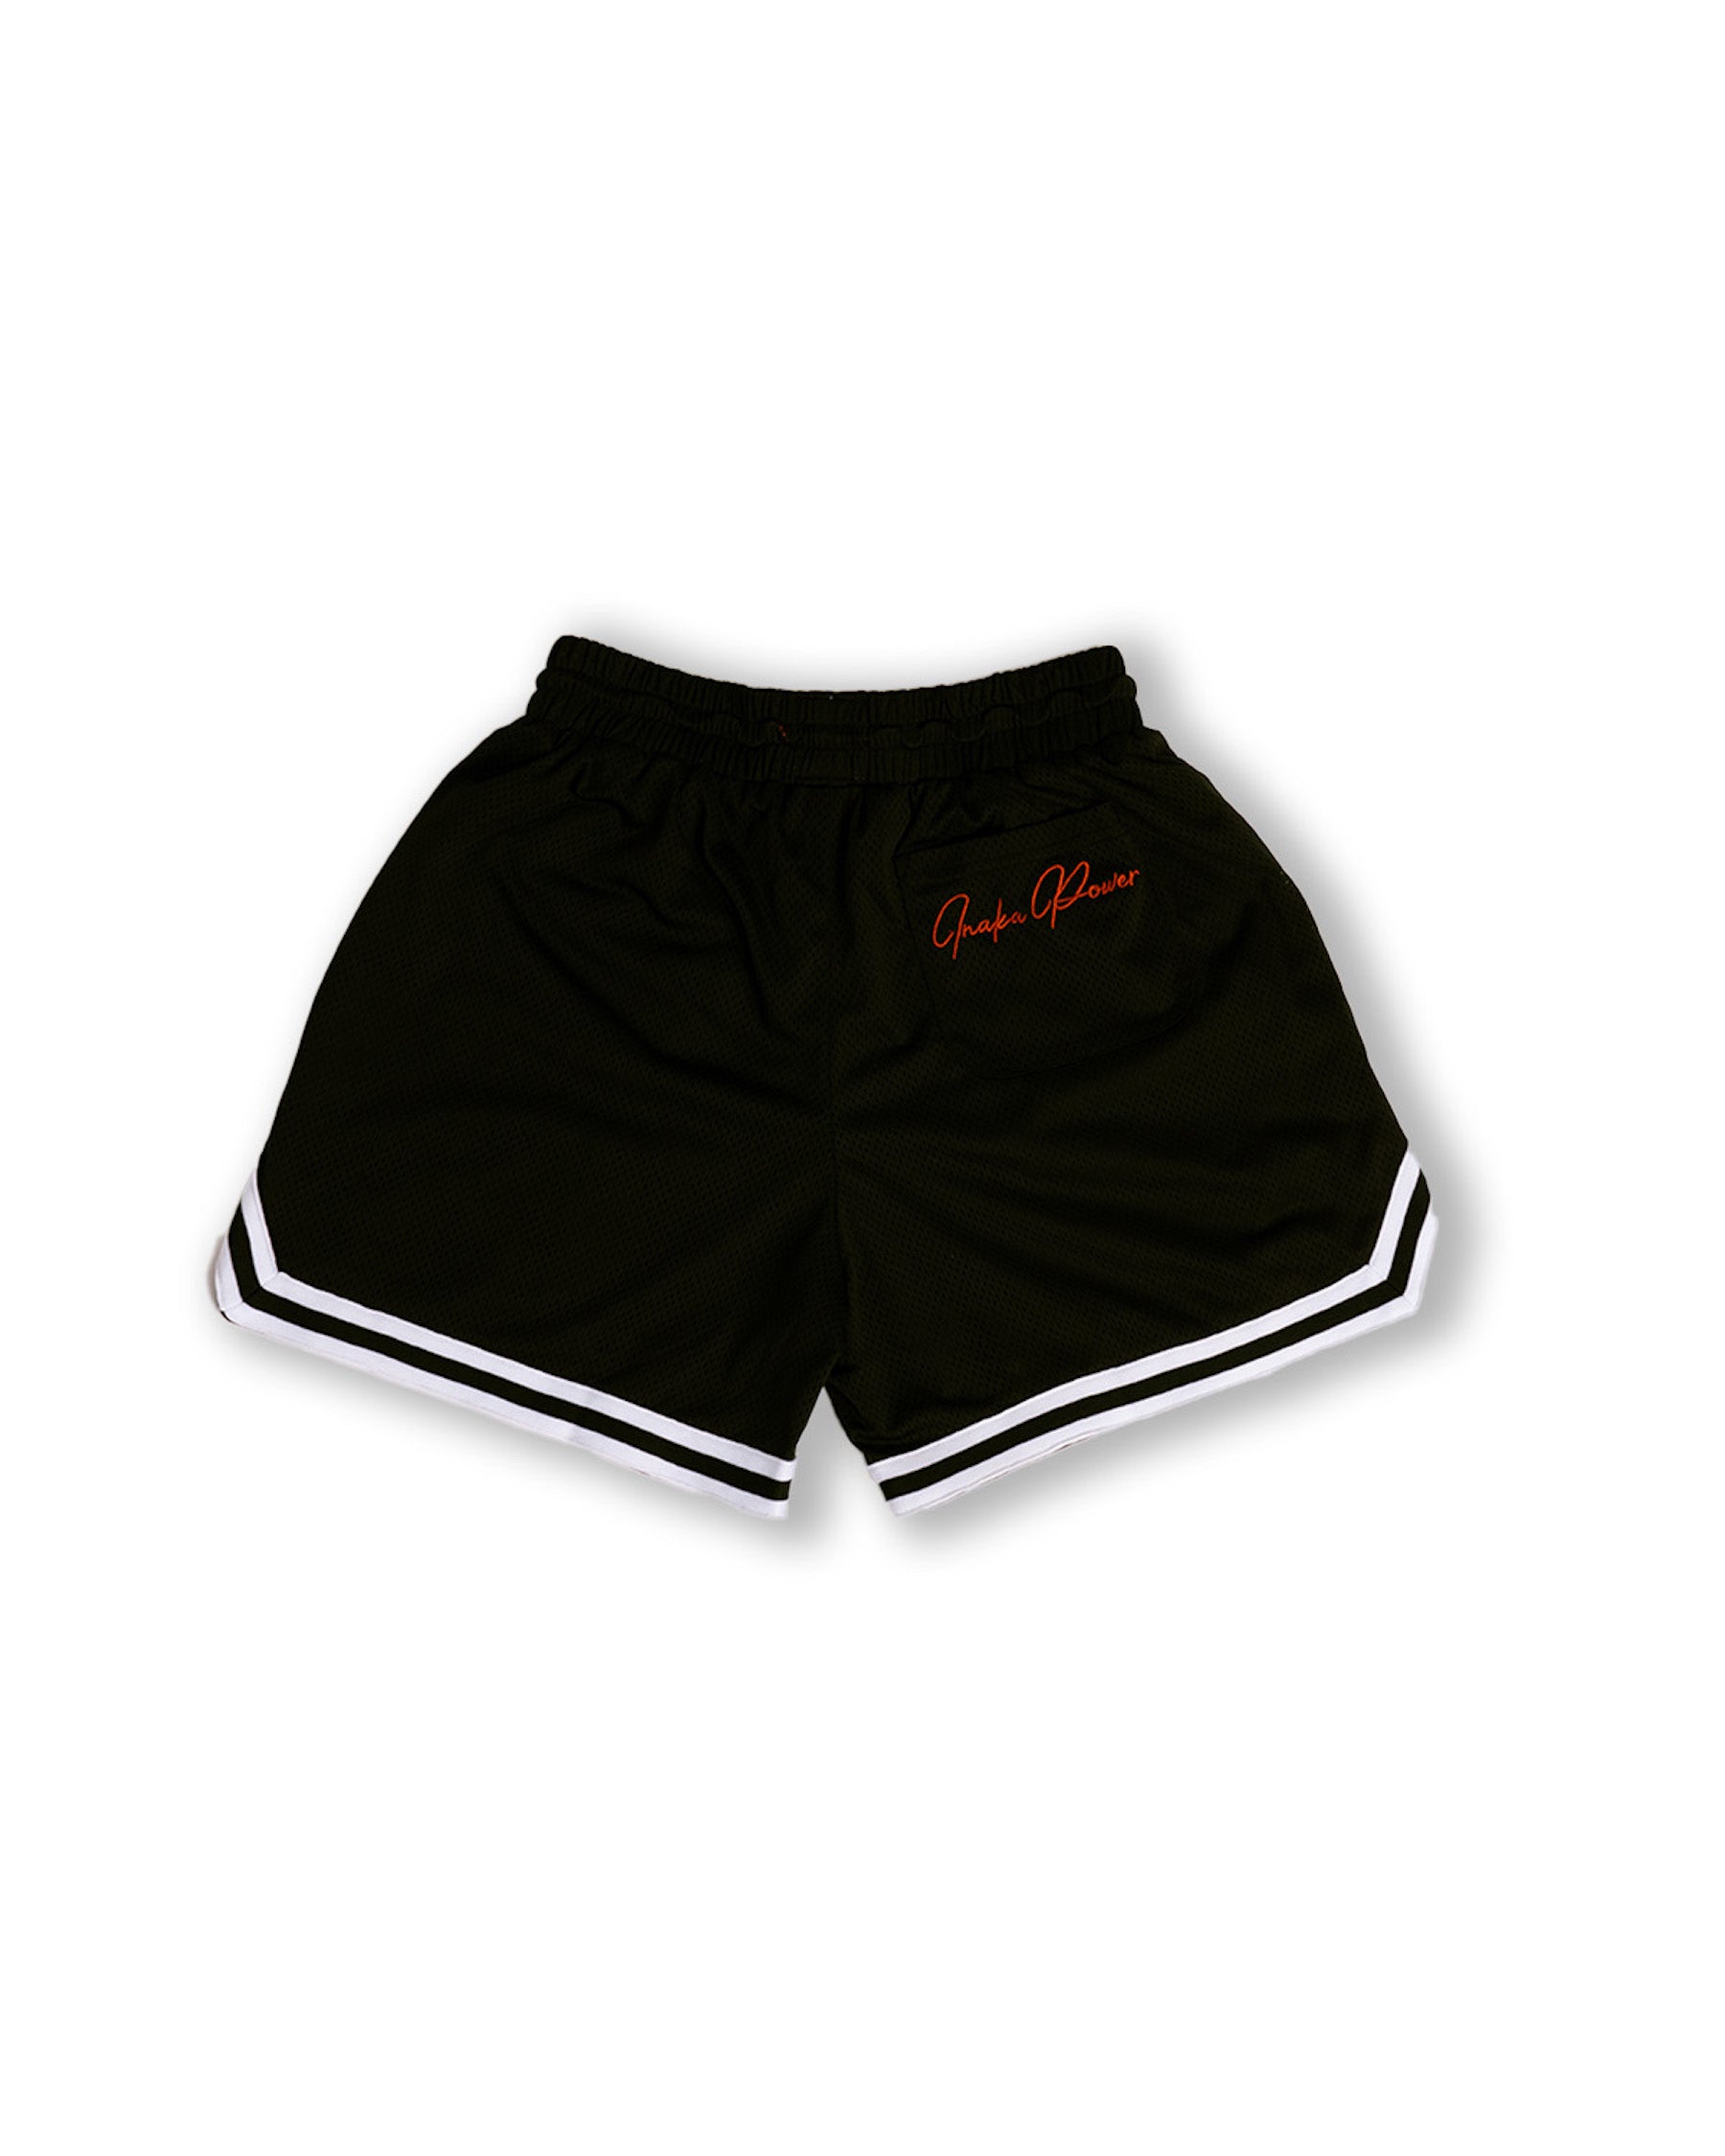 Men's League Mesh Shorts - Midnight